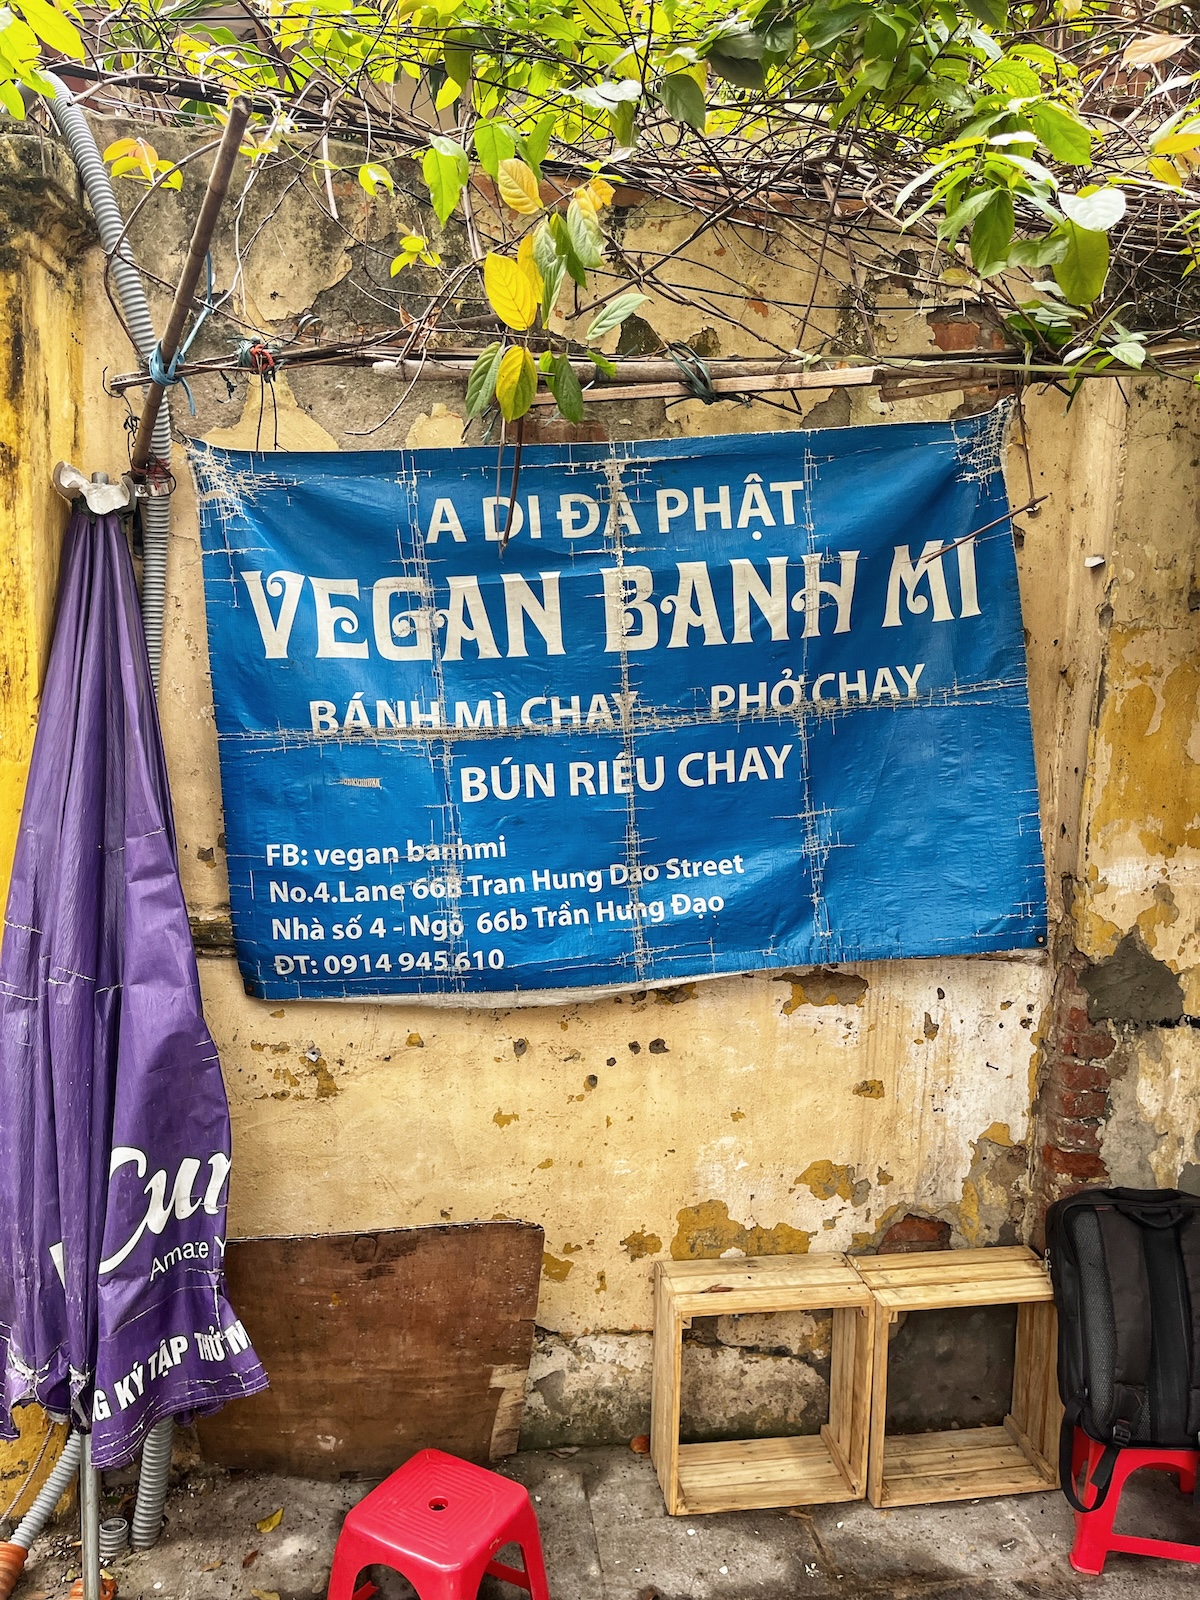 Vegan banh mi sign in Hanoi with Vietnamese writing 